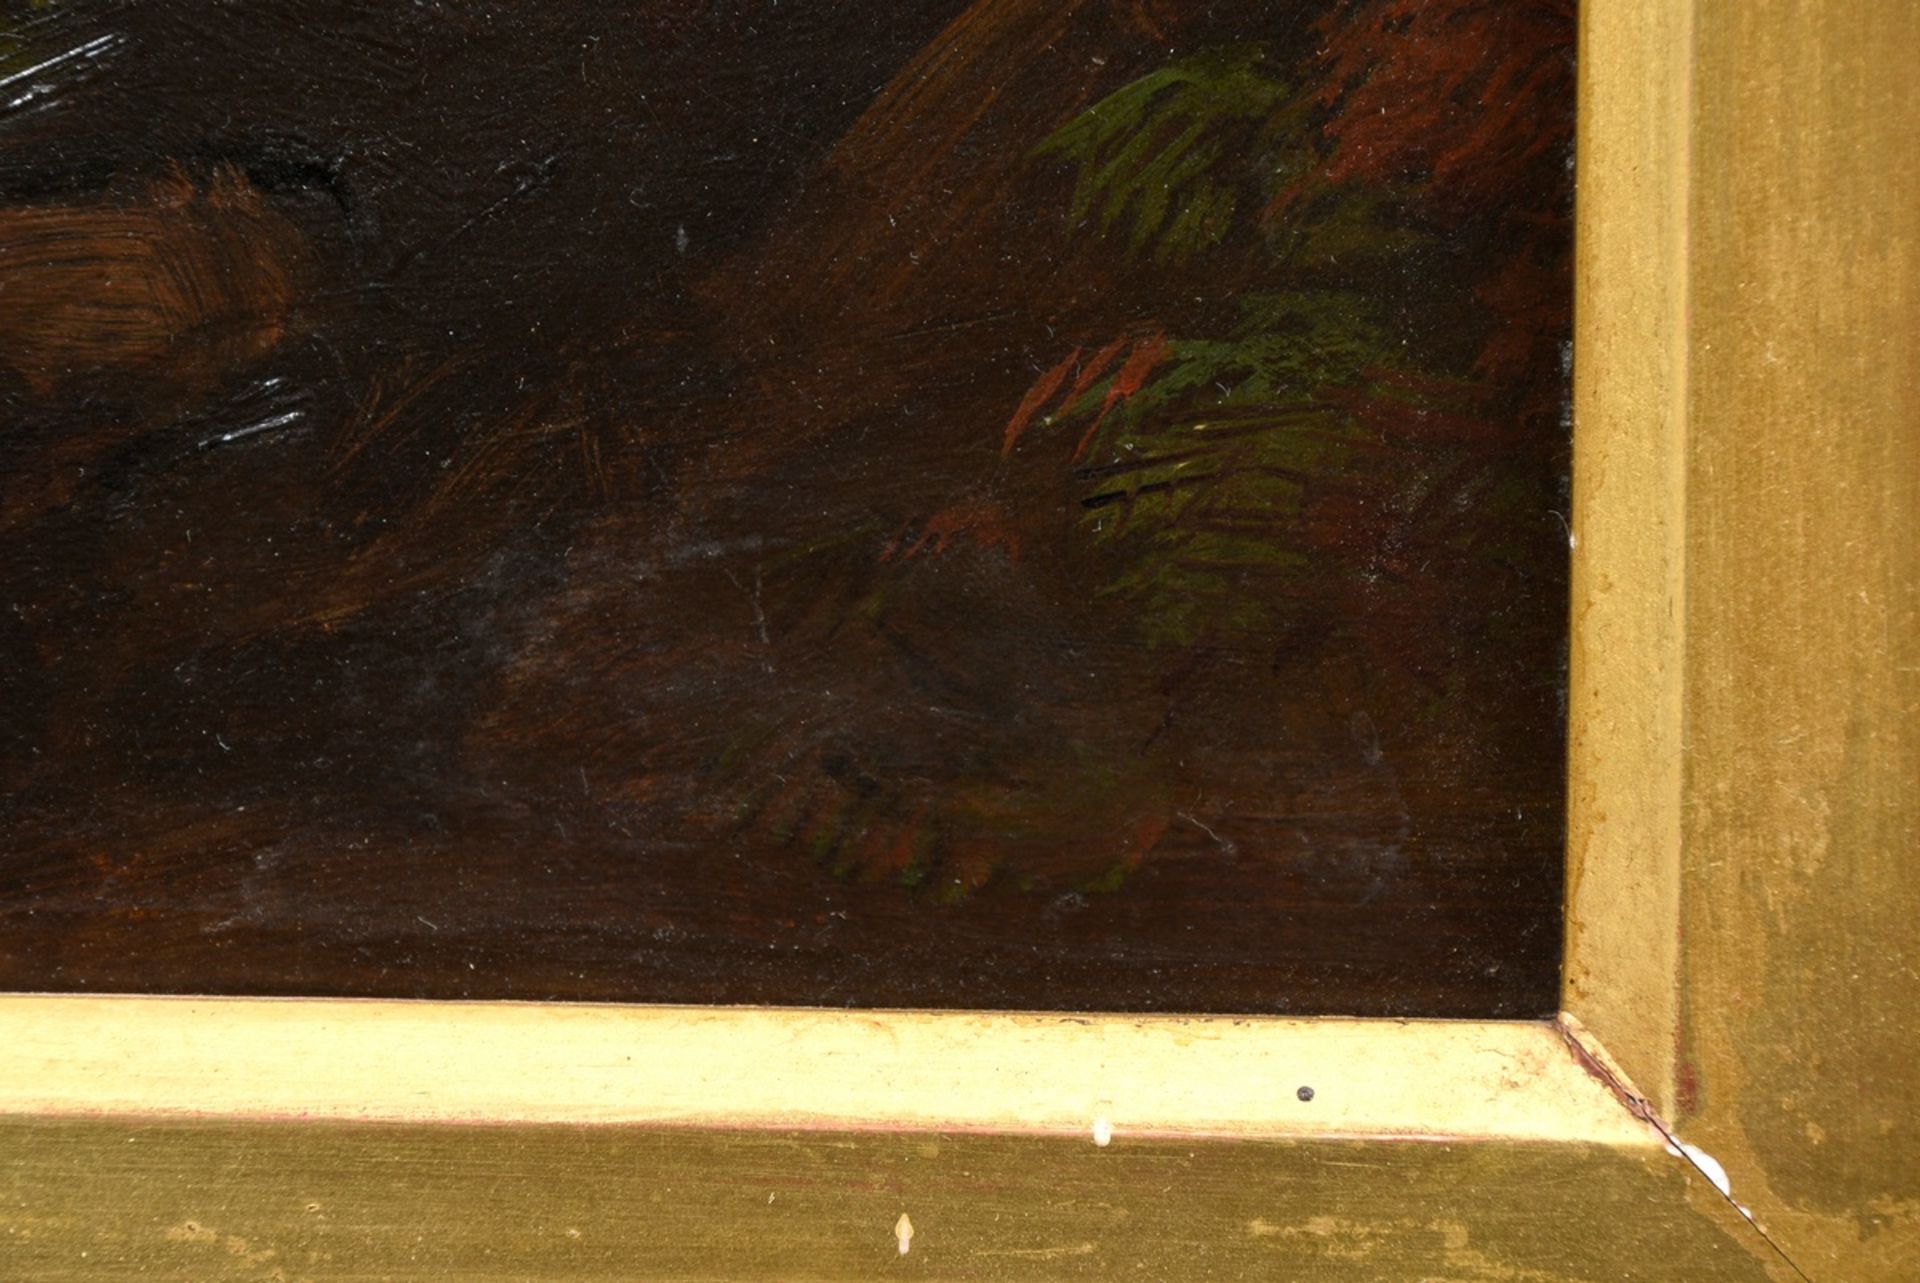 Train, Edward (1801-1866) "Dead Grey Heron in Mountain Landscape" 1855, oil/canvas mounted, b.l. si - Image 3 of 4